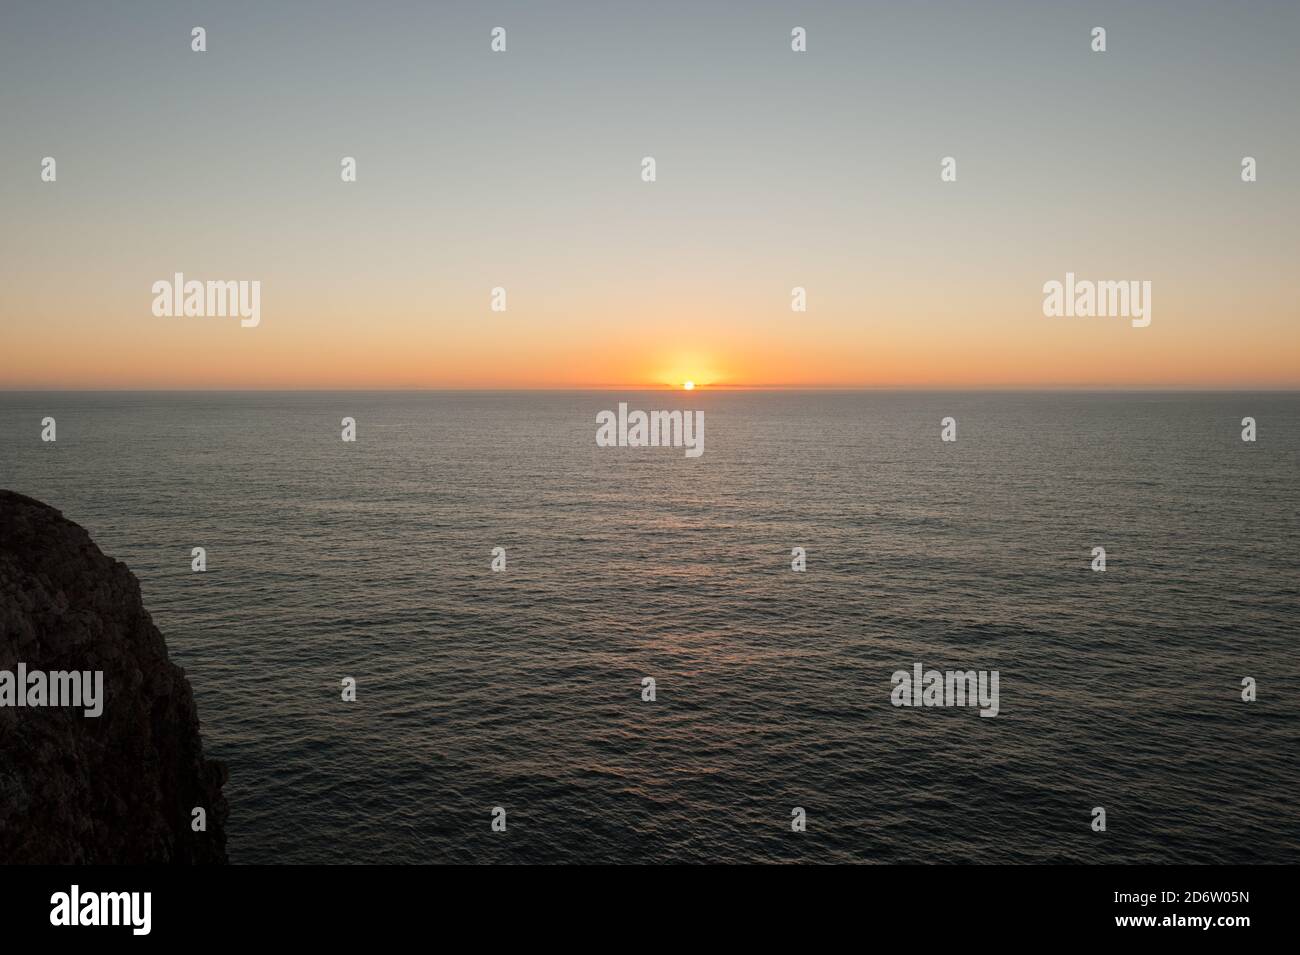 Sun setting over ocean in Sagres, Portugal in Summer Stock Photo